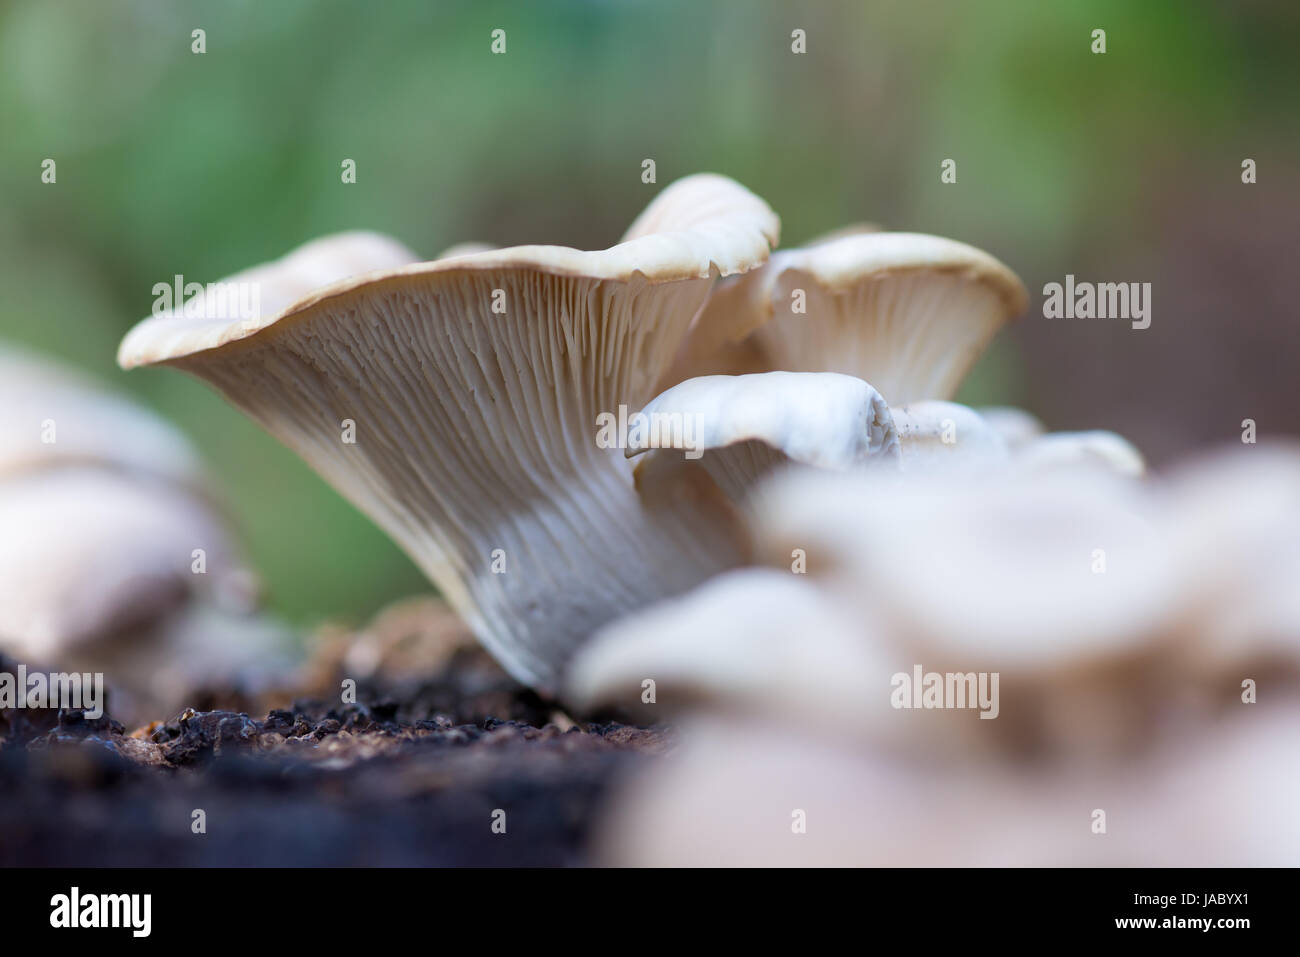 A woodland Oyster Mushroom growing on a decaying Poplar tree stump. Stock Photo